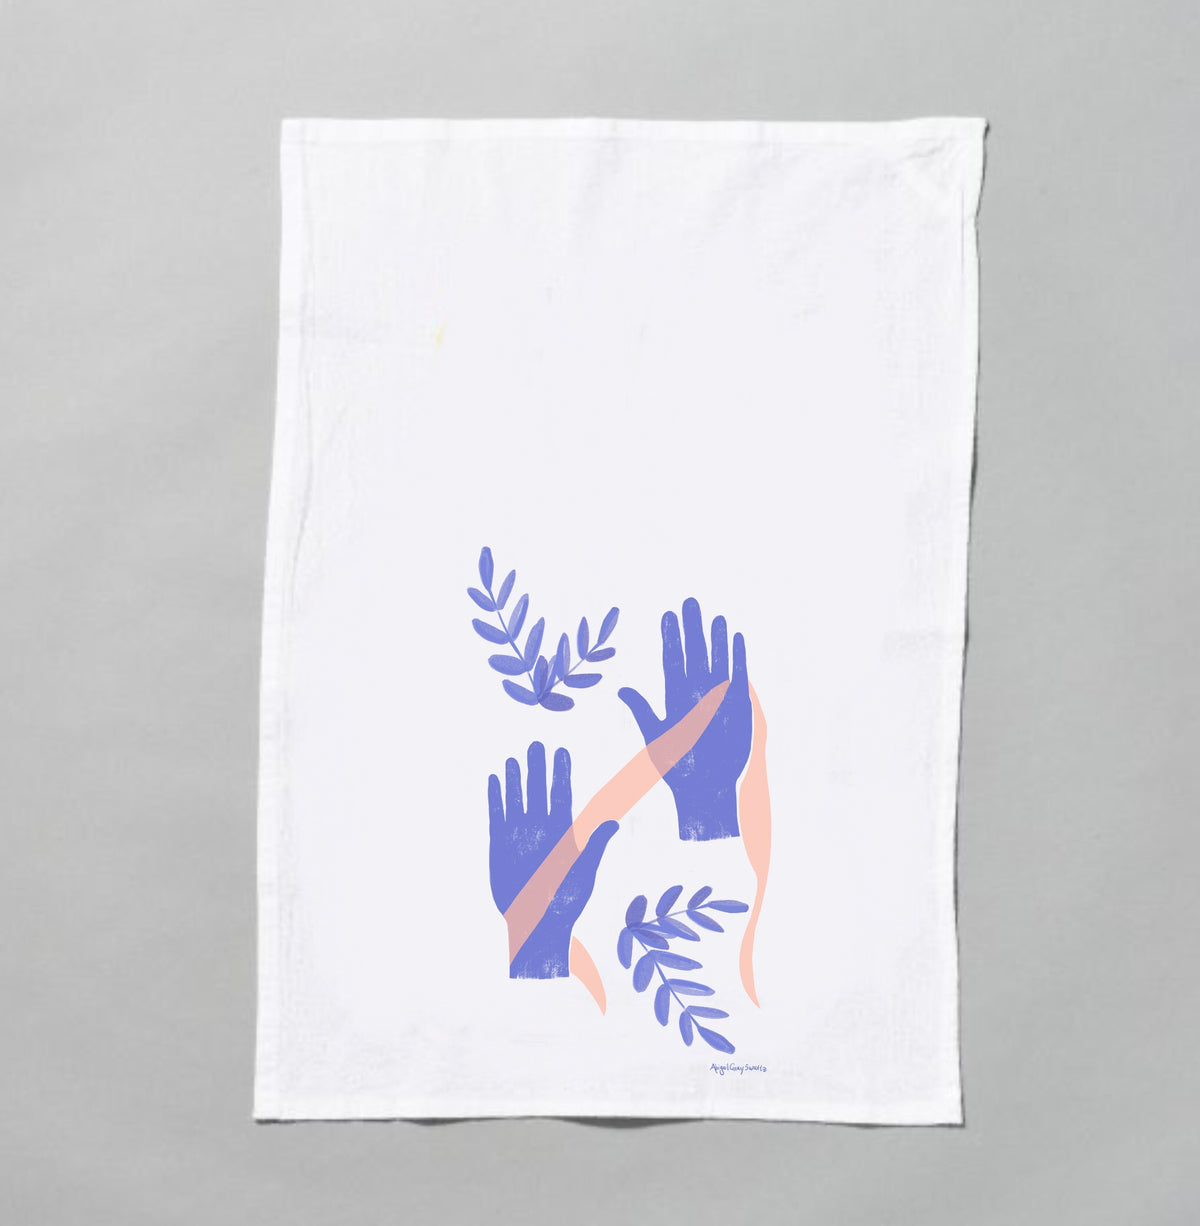 Set of 3 Tea towels, Flour sack screen print tea towel, by Abigail Gray Swartz